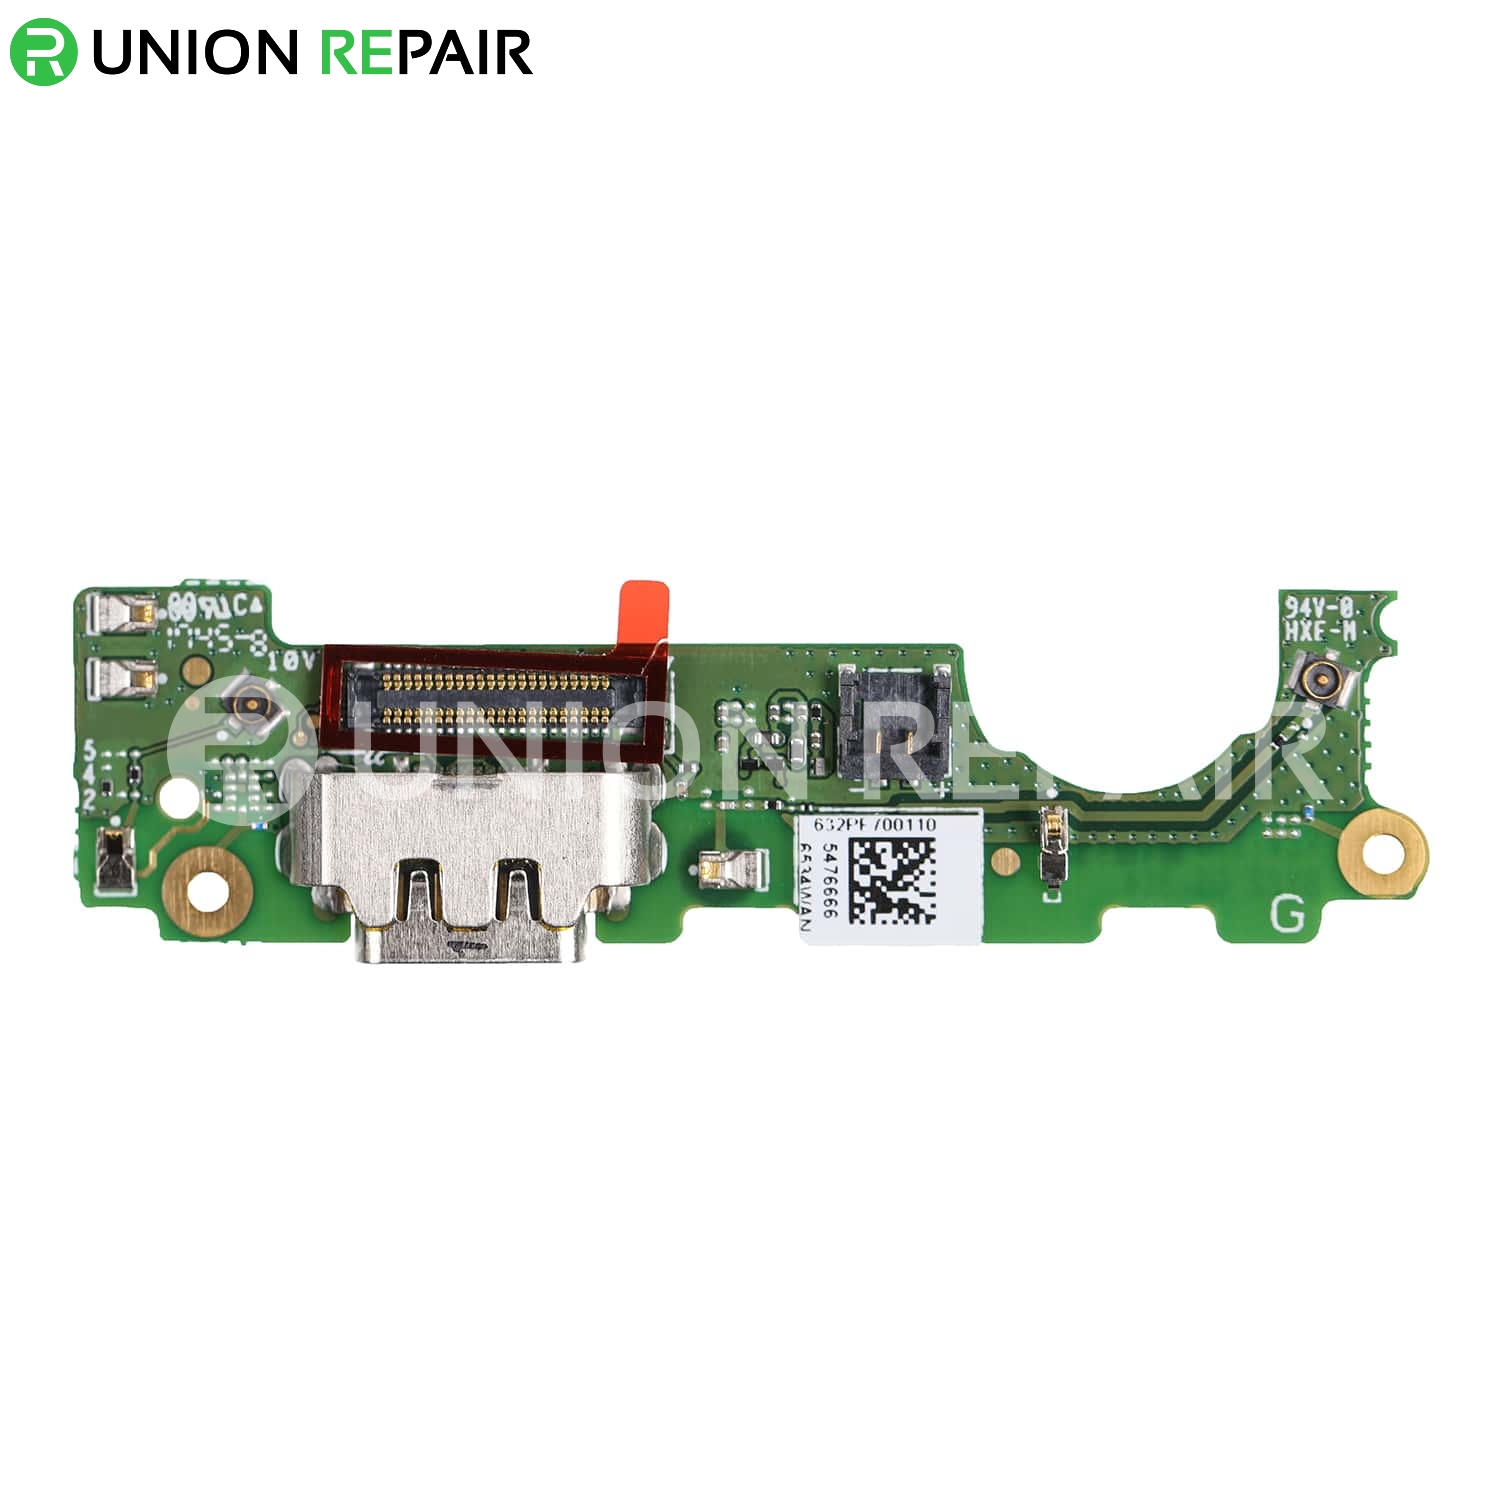 Overwegen Wonder Conflict Replacement for Sony Xperia XA2 Ultra USB Charging Port Flex Cable